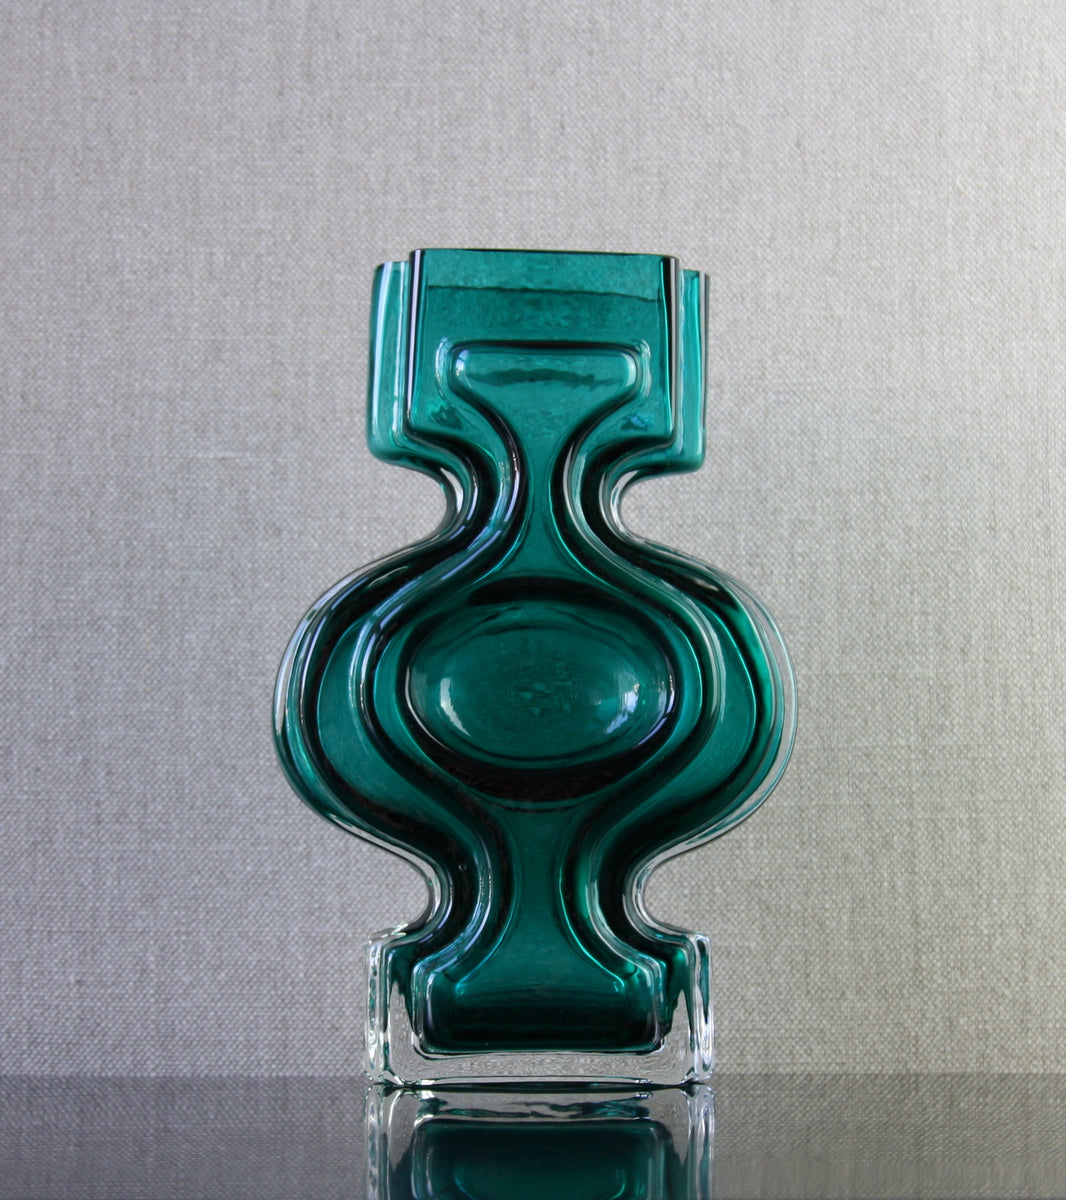 Teal Model 1310 "Emma" Vase / Helena Tynell, 1968